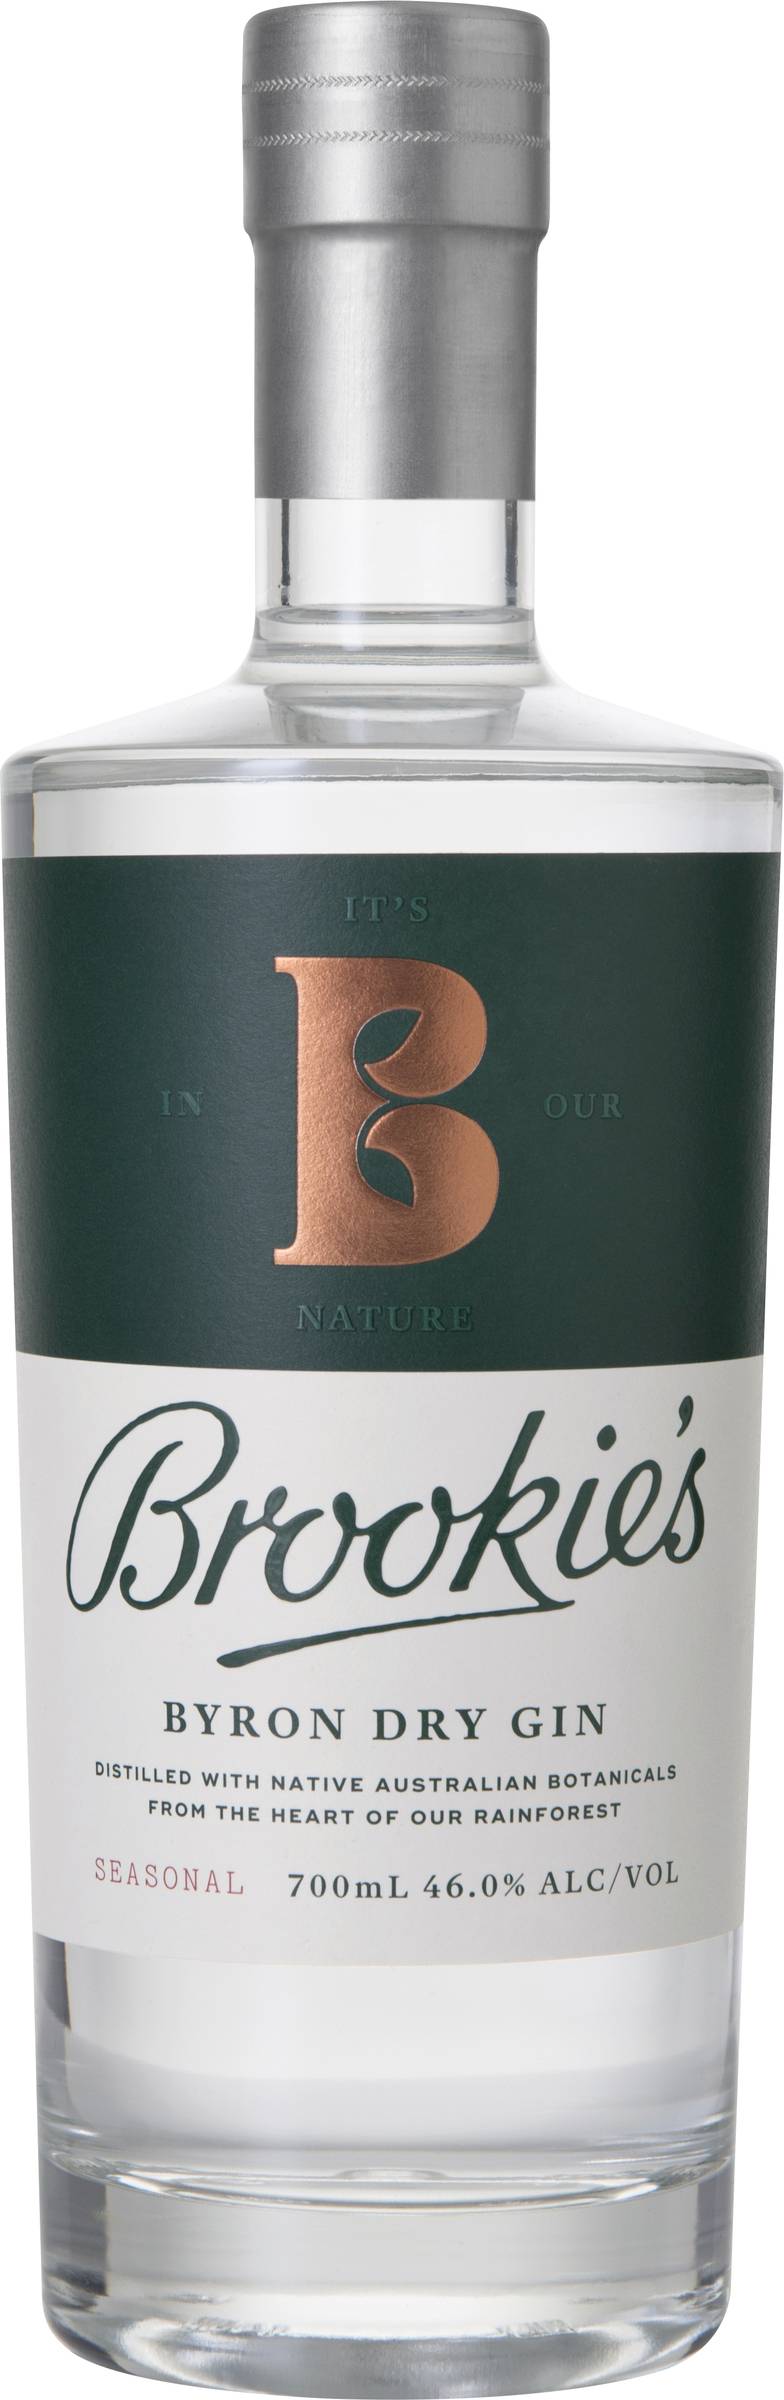 Brookie's Byron Dry Gin 700ml